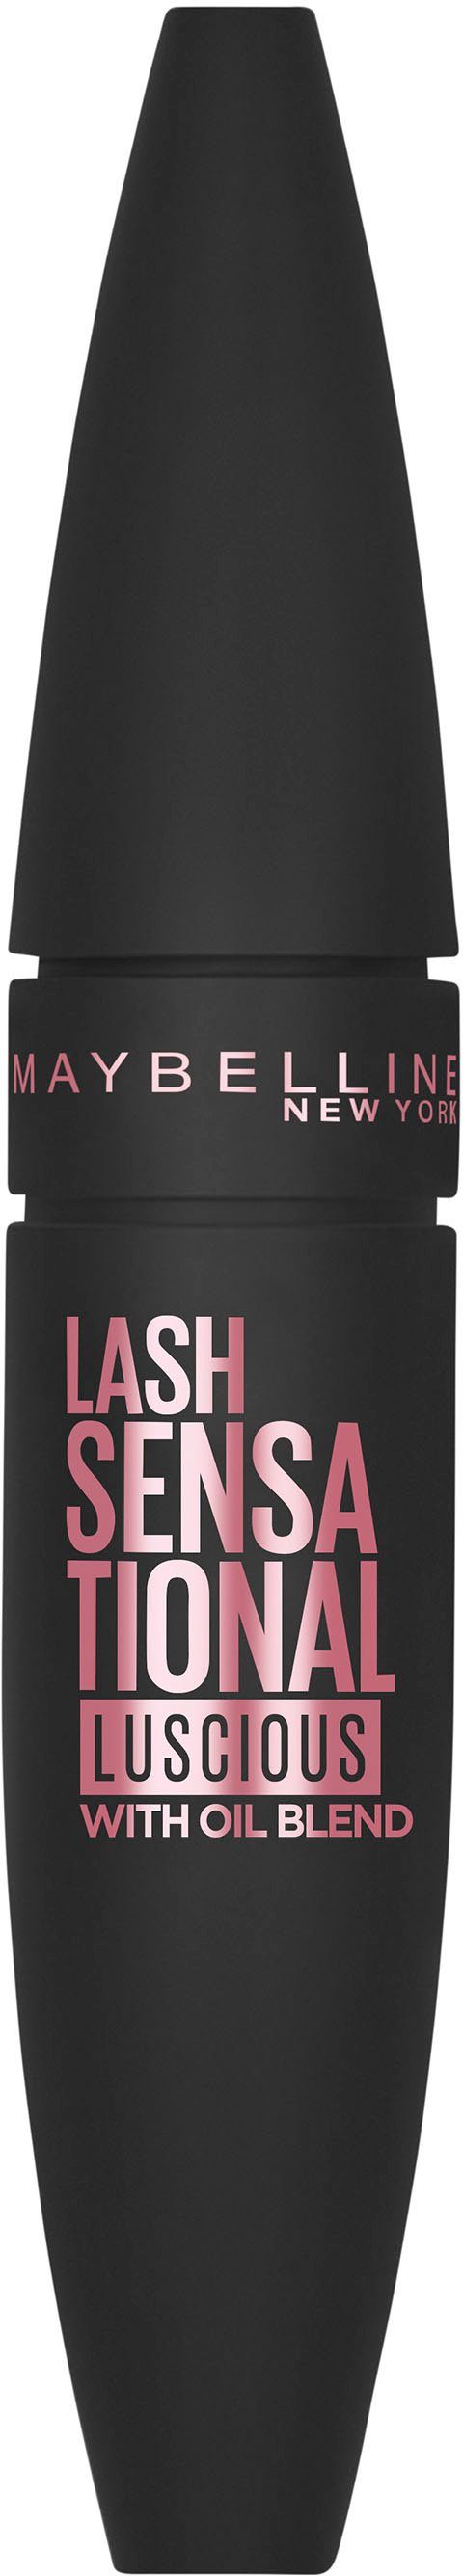 MAYBELLINE Sensational Luscious YORK Lash NEW Mascara